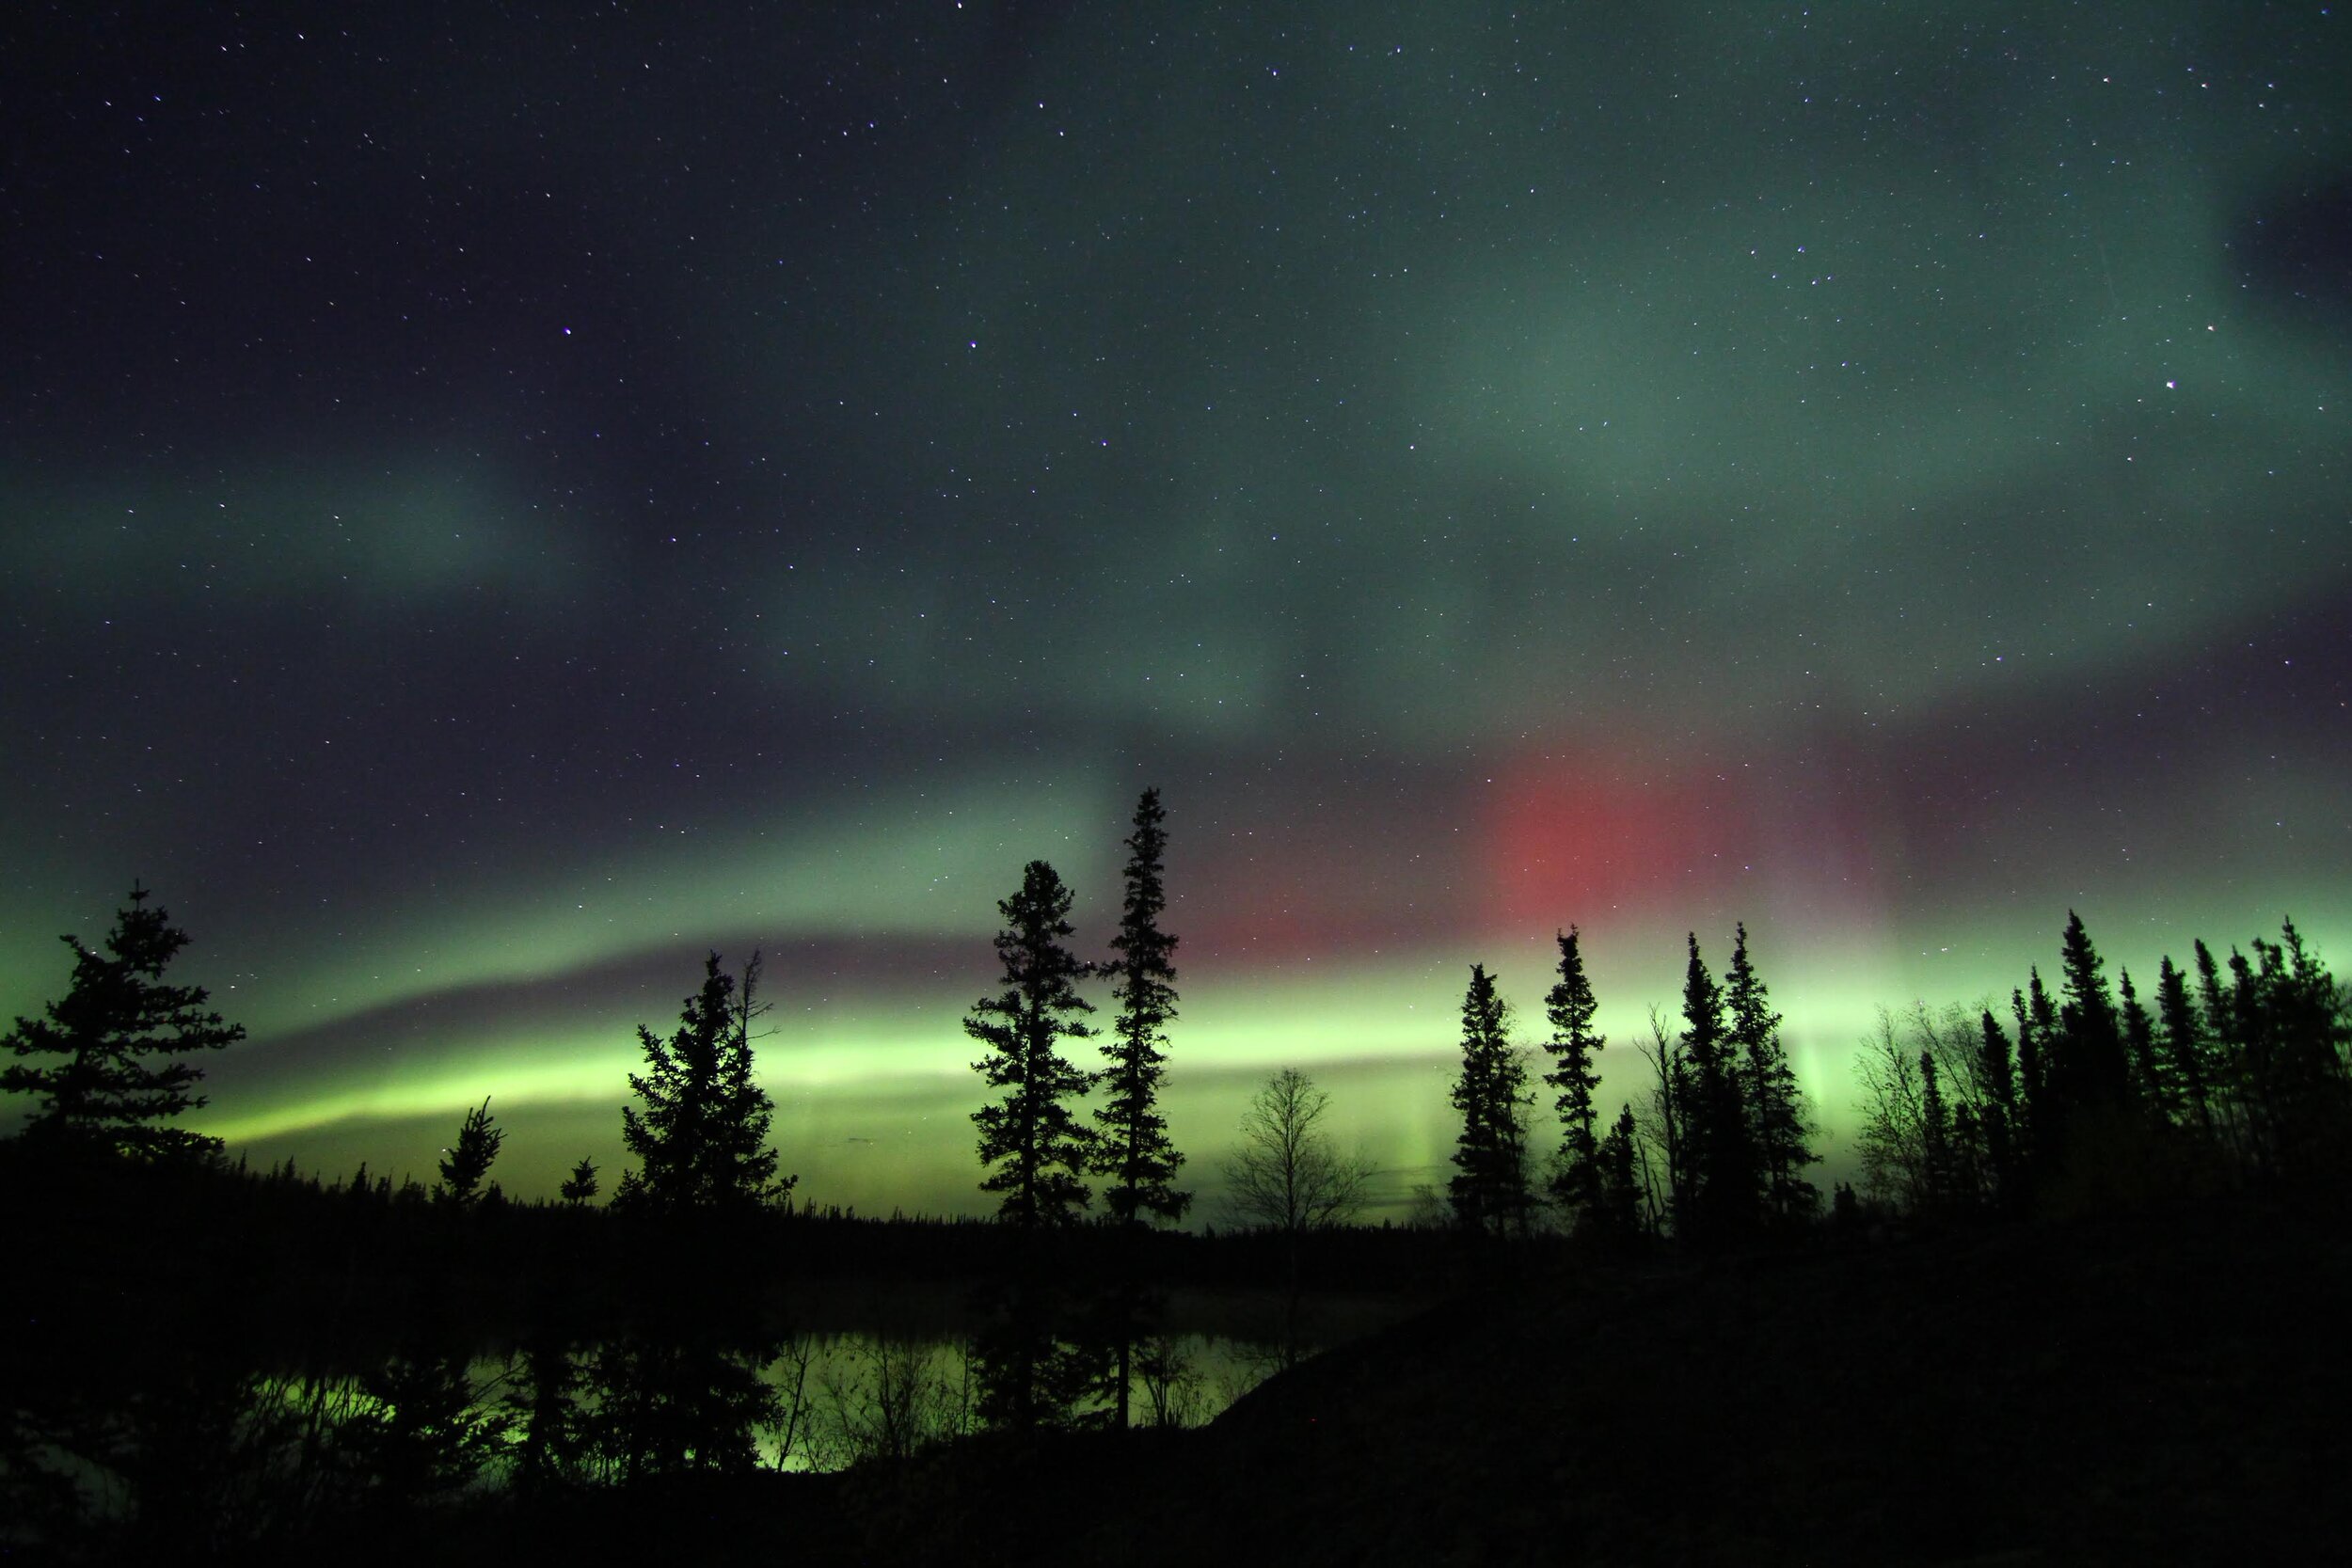 Aurora-Village-Yellowknife-Northwest-Territories-Canada-Aurora-Borealis-Northern-Lights-summer-Nature-NoHumans-silho-Landscape-Colourful-Green-Pink-Summer-Hero.JPG